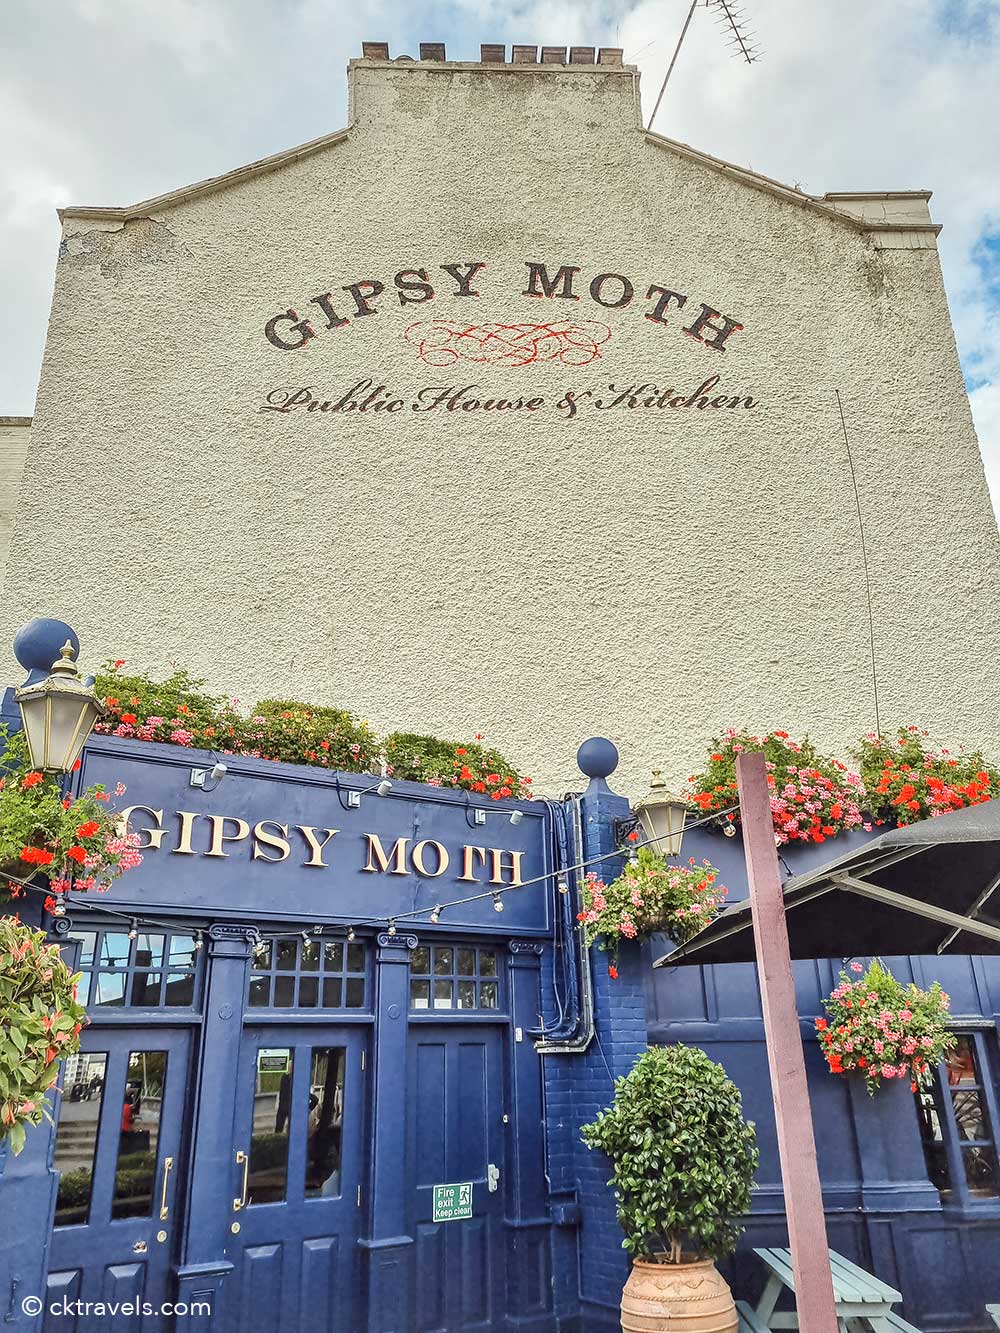 Gipsy Moth pub in Greenwich London